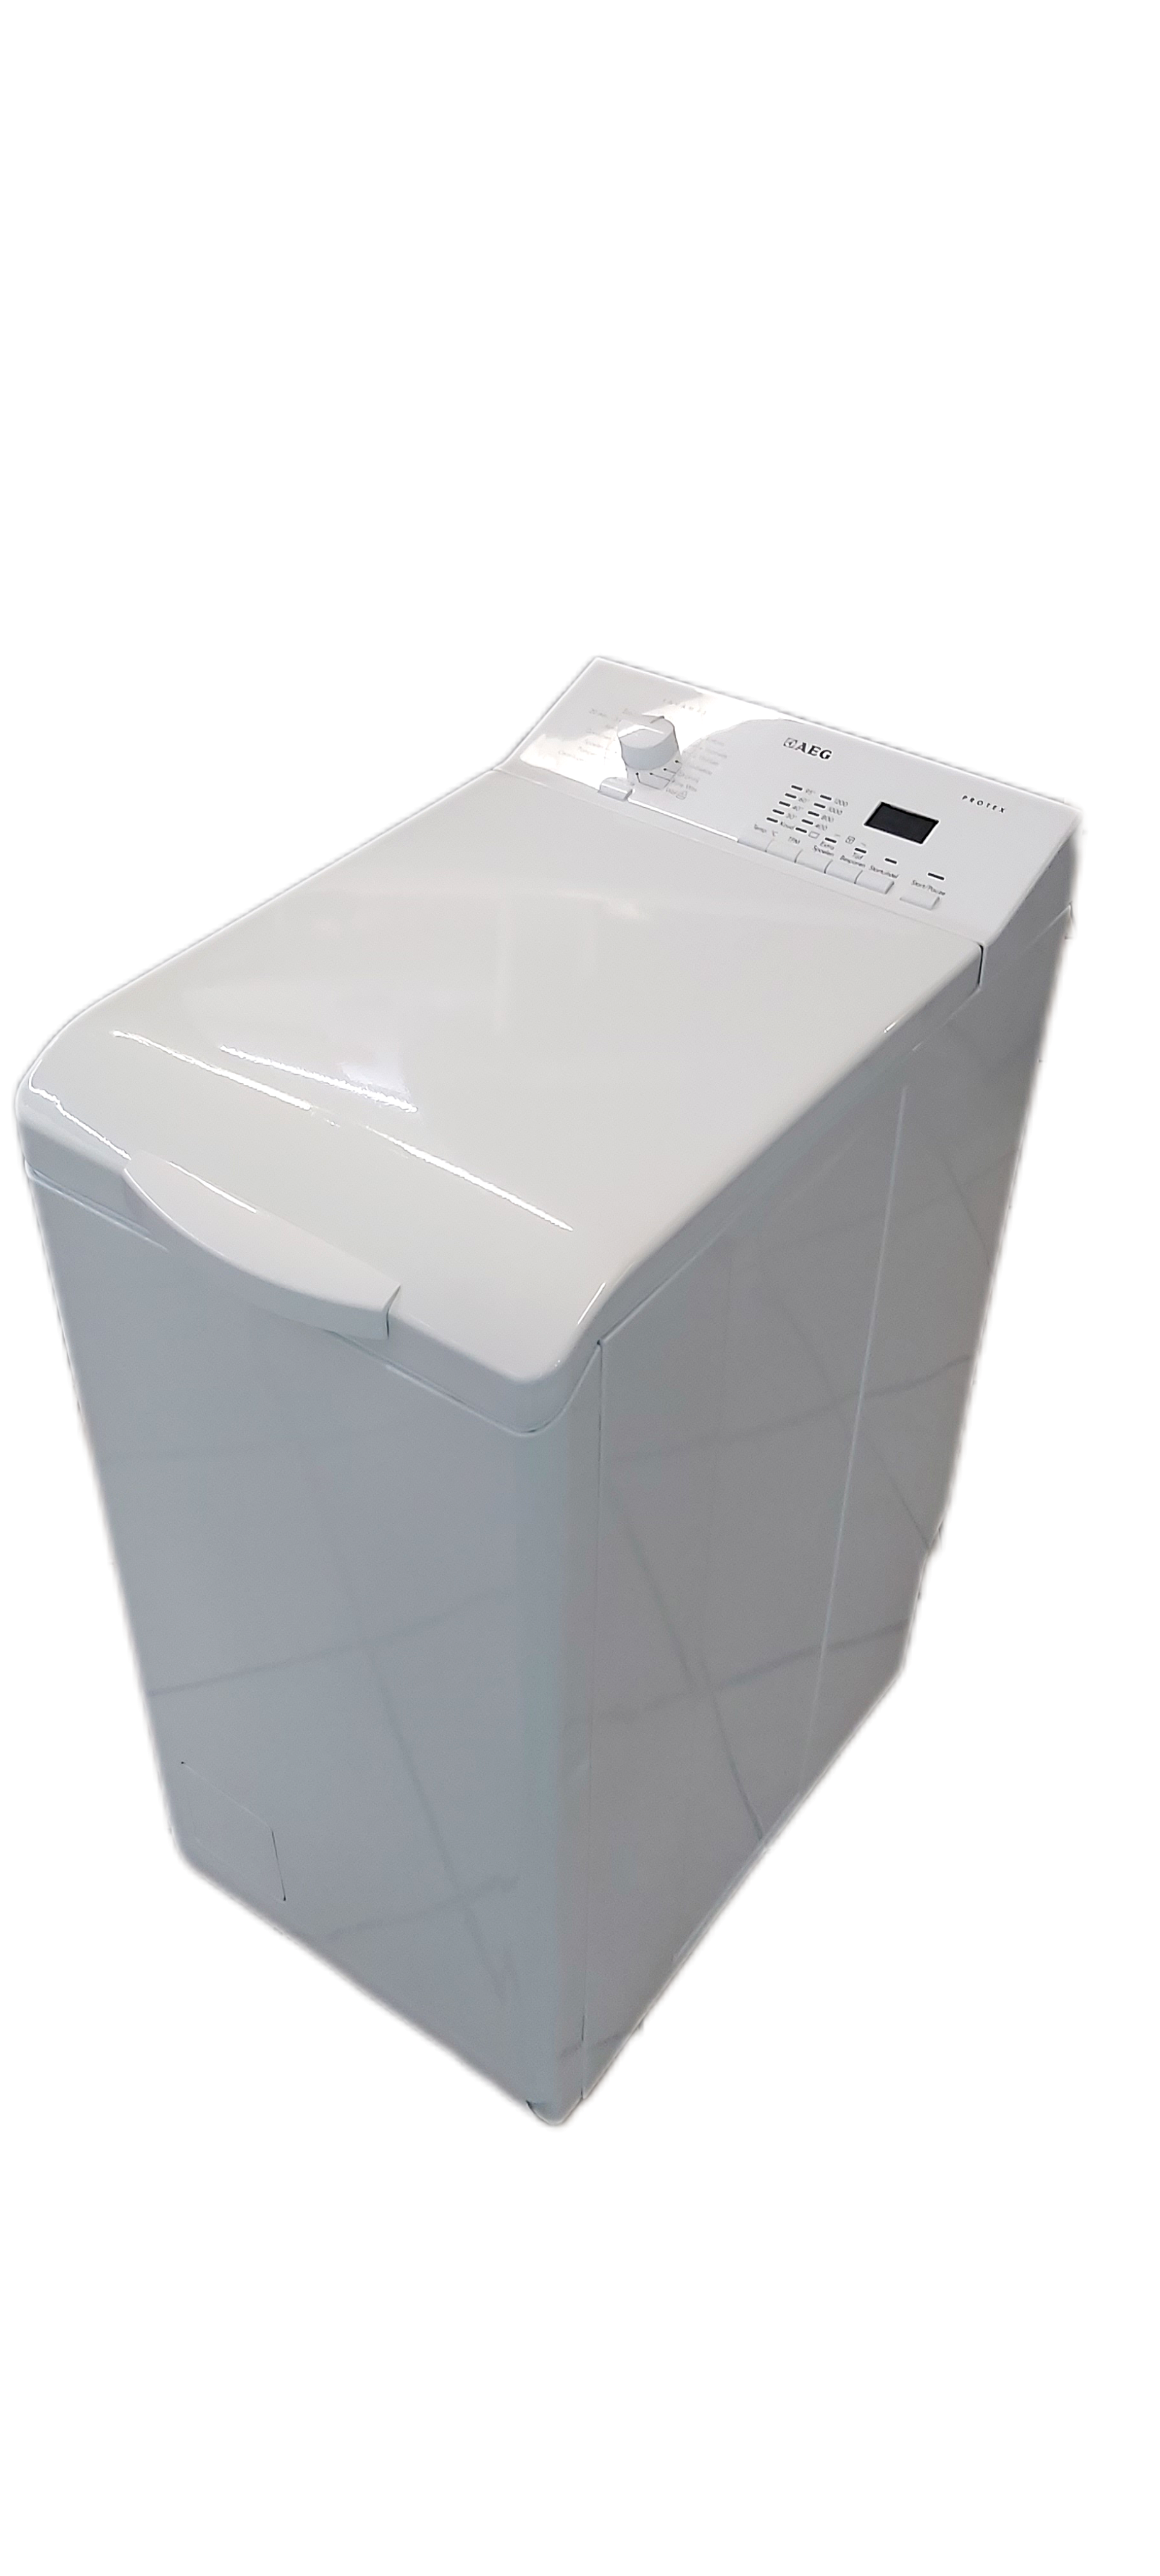 AEG L60260TL wasmachine bovenlader